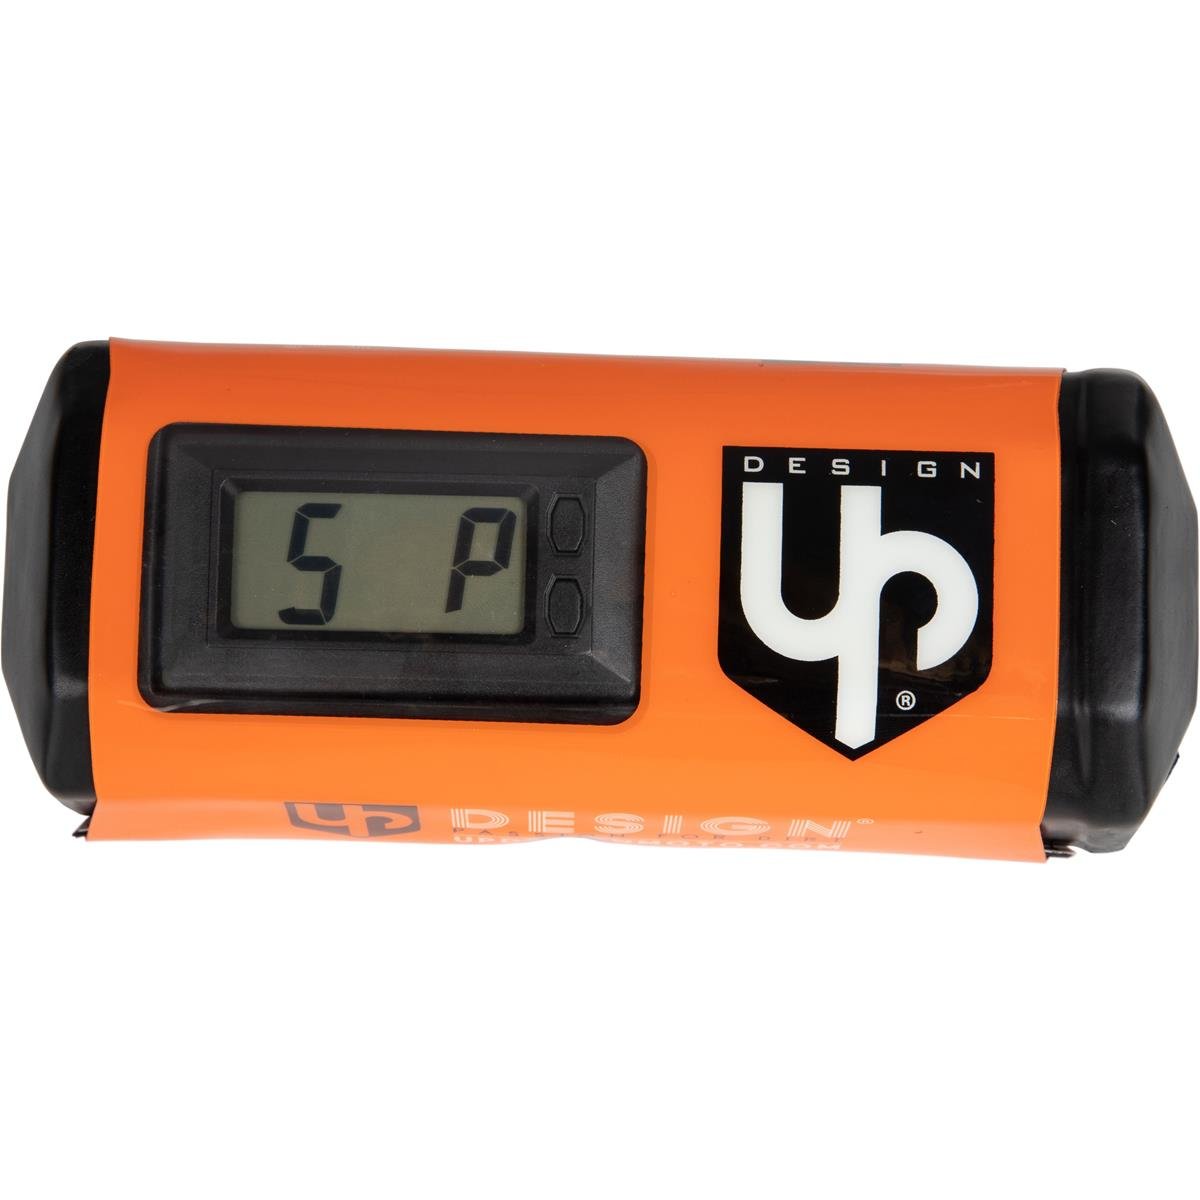 UPDESIGN Bar Pad Motocross Orange, with clock